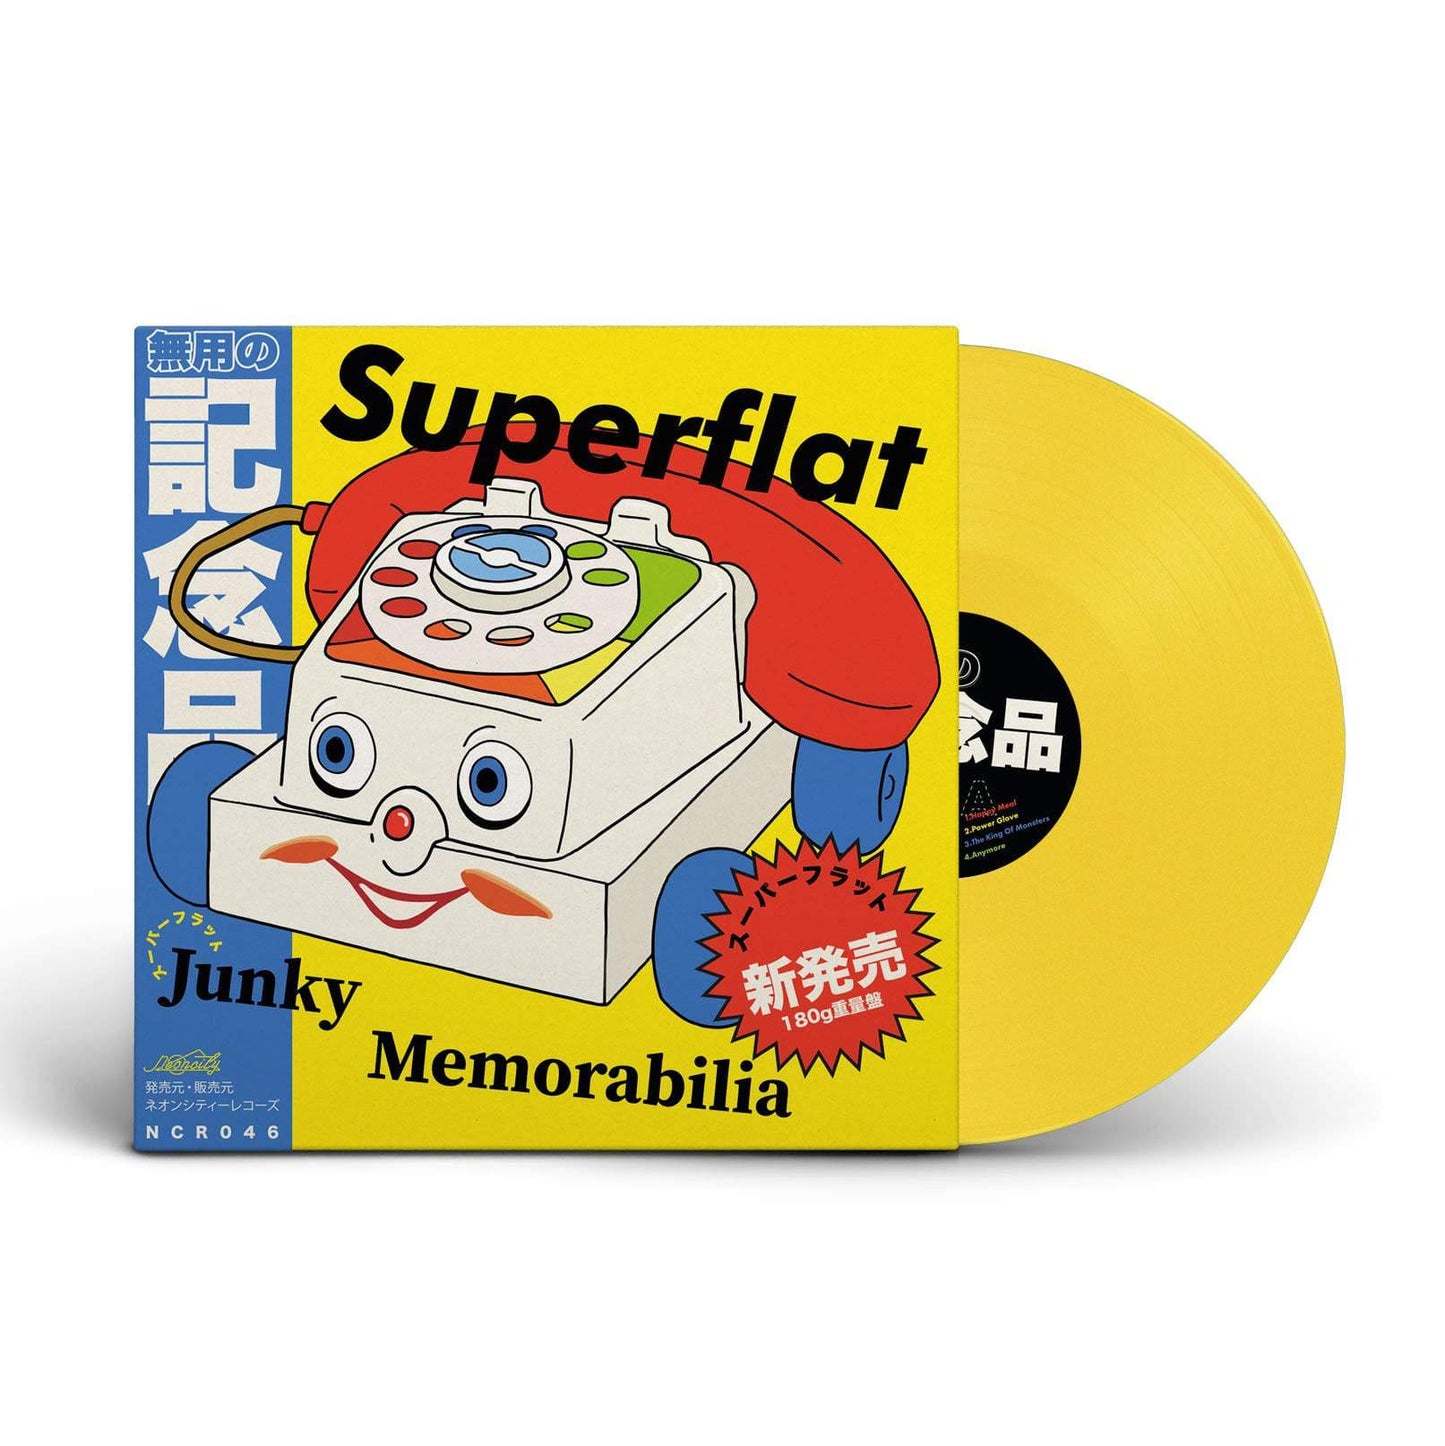 Superflat- Junky Memorabilia Limited Edition 12" Vinyl - Neoncity Records